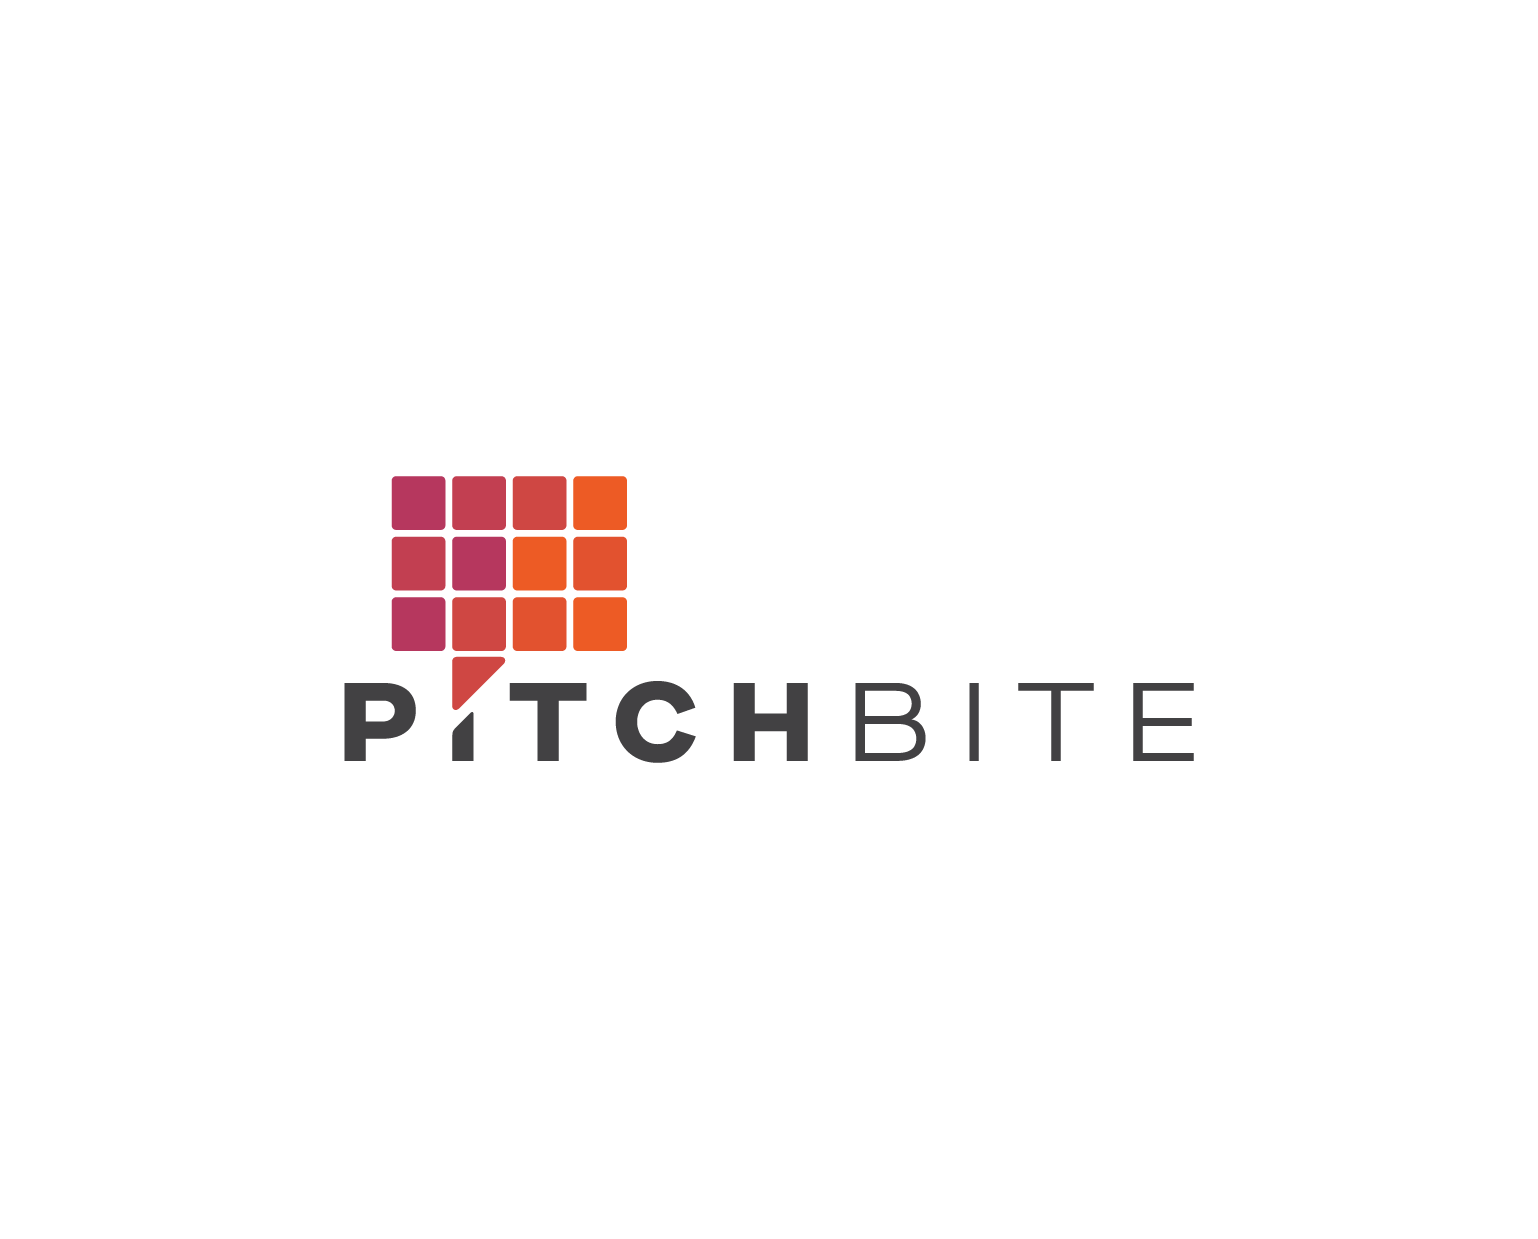 Pitchbite - Logo design and brand development